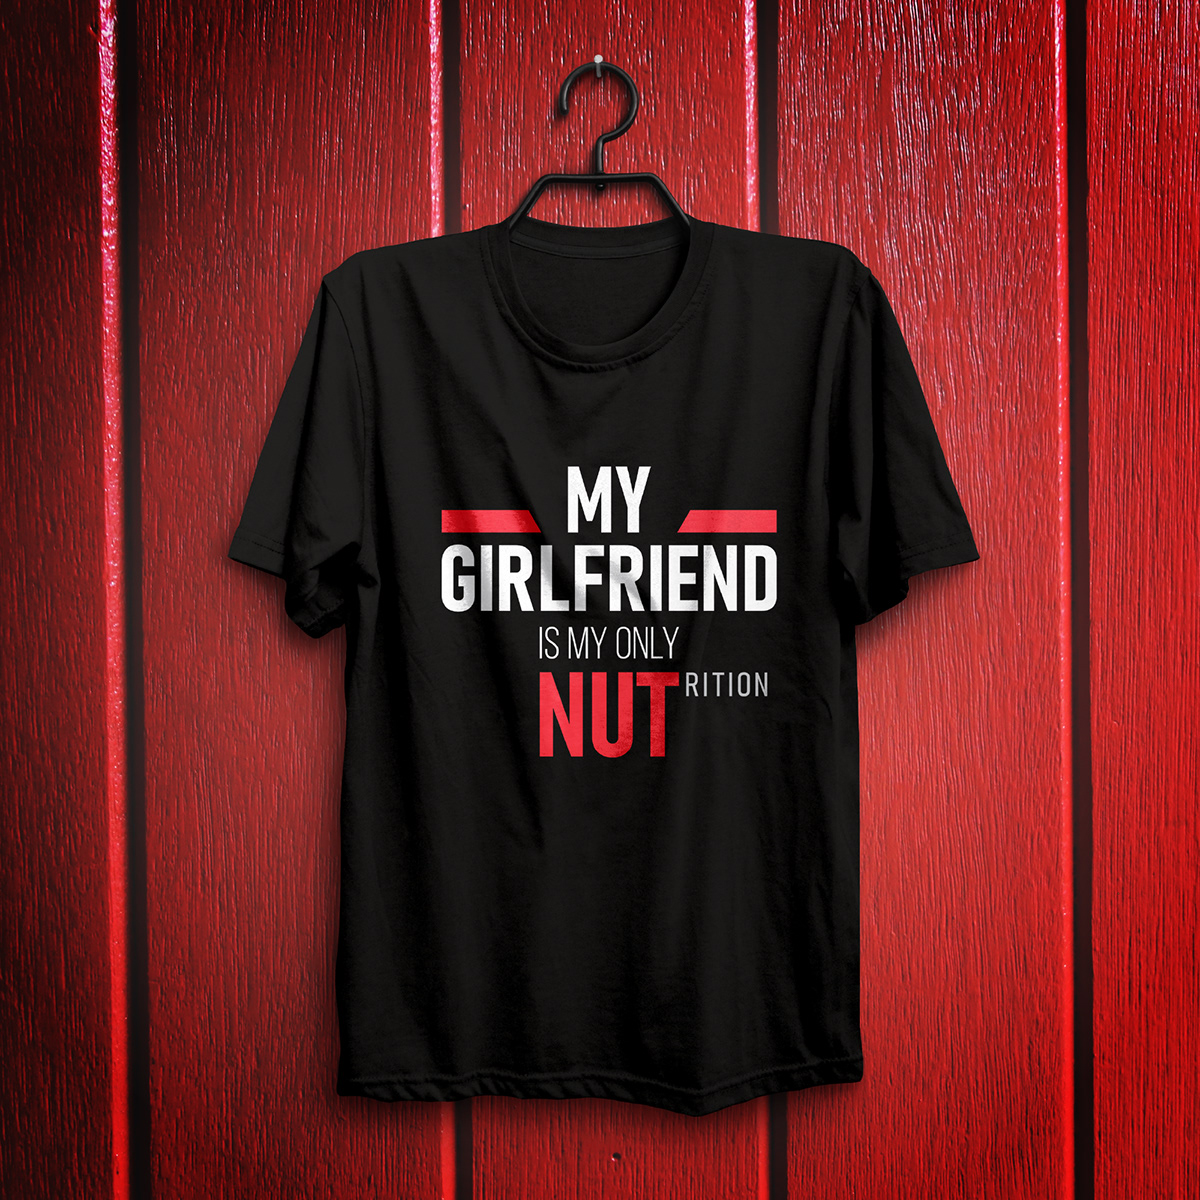 t-shirt typography   Clothing valentine merchandise T-Shirt Design t-shirts apparel funny t-shirt Humor Shirt